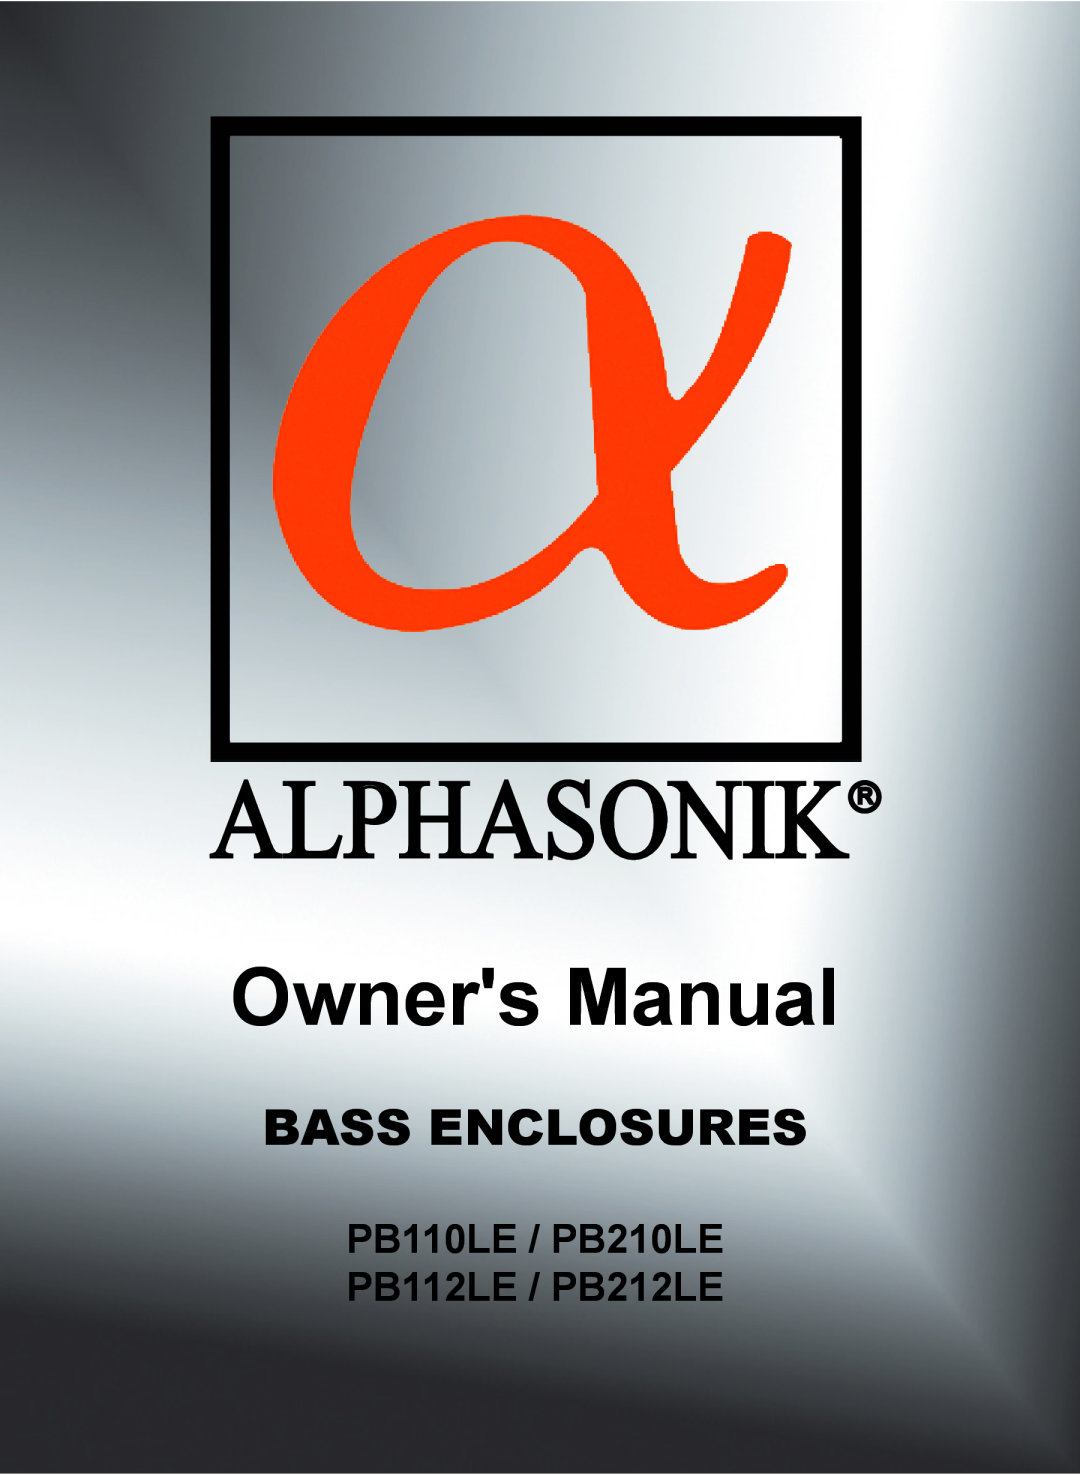 Alphasonik owner manual Alphasonikr, Bass Enclosures, PB110LE / PB210LE PB112LE / PB212LE 